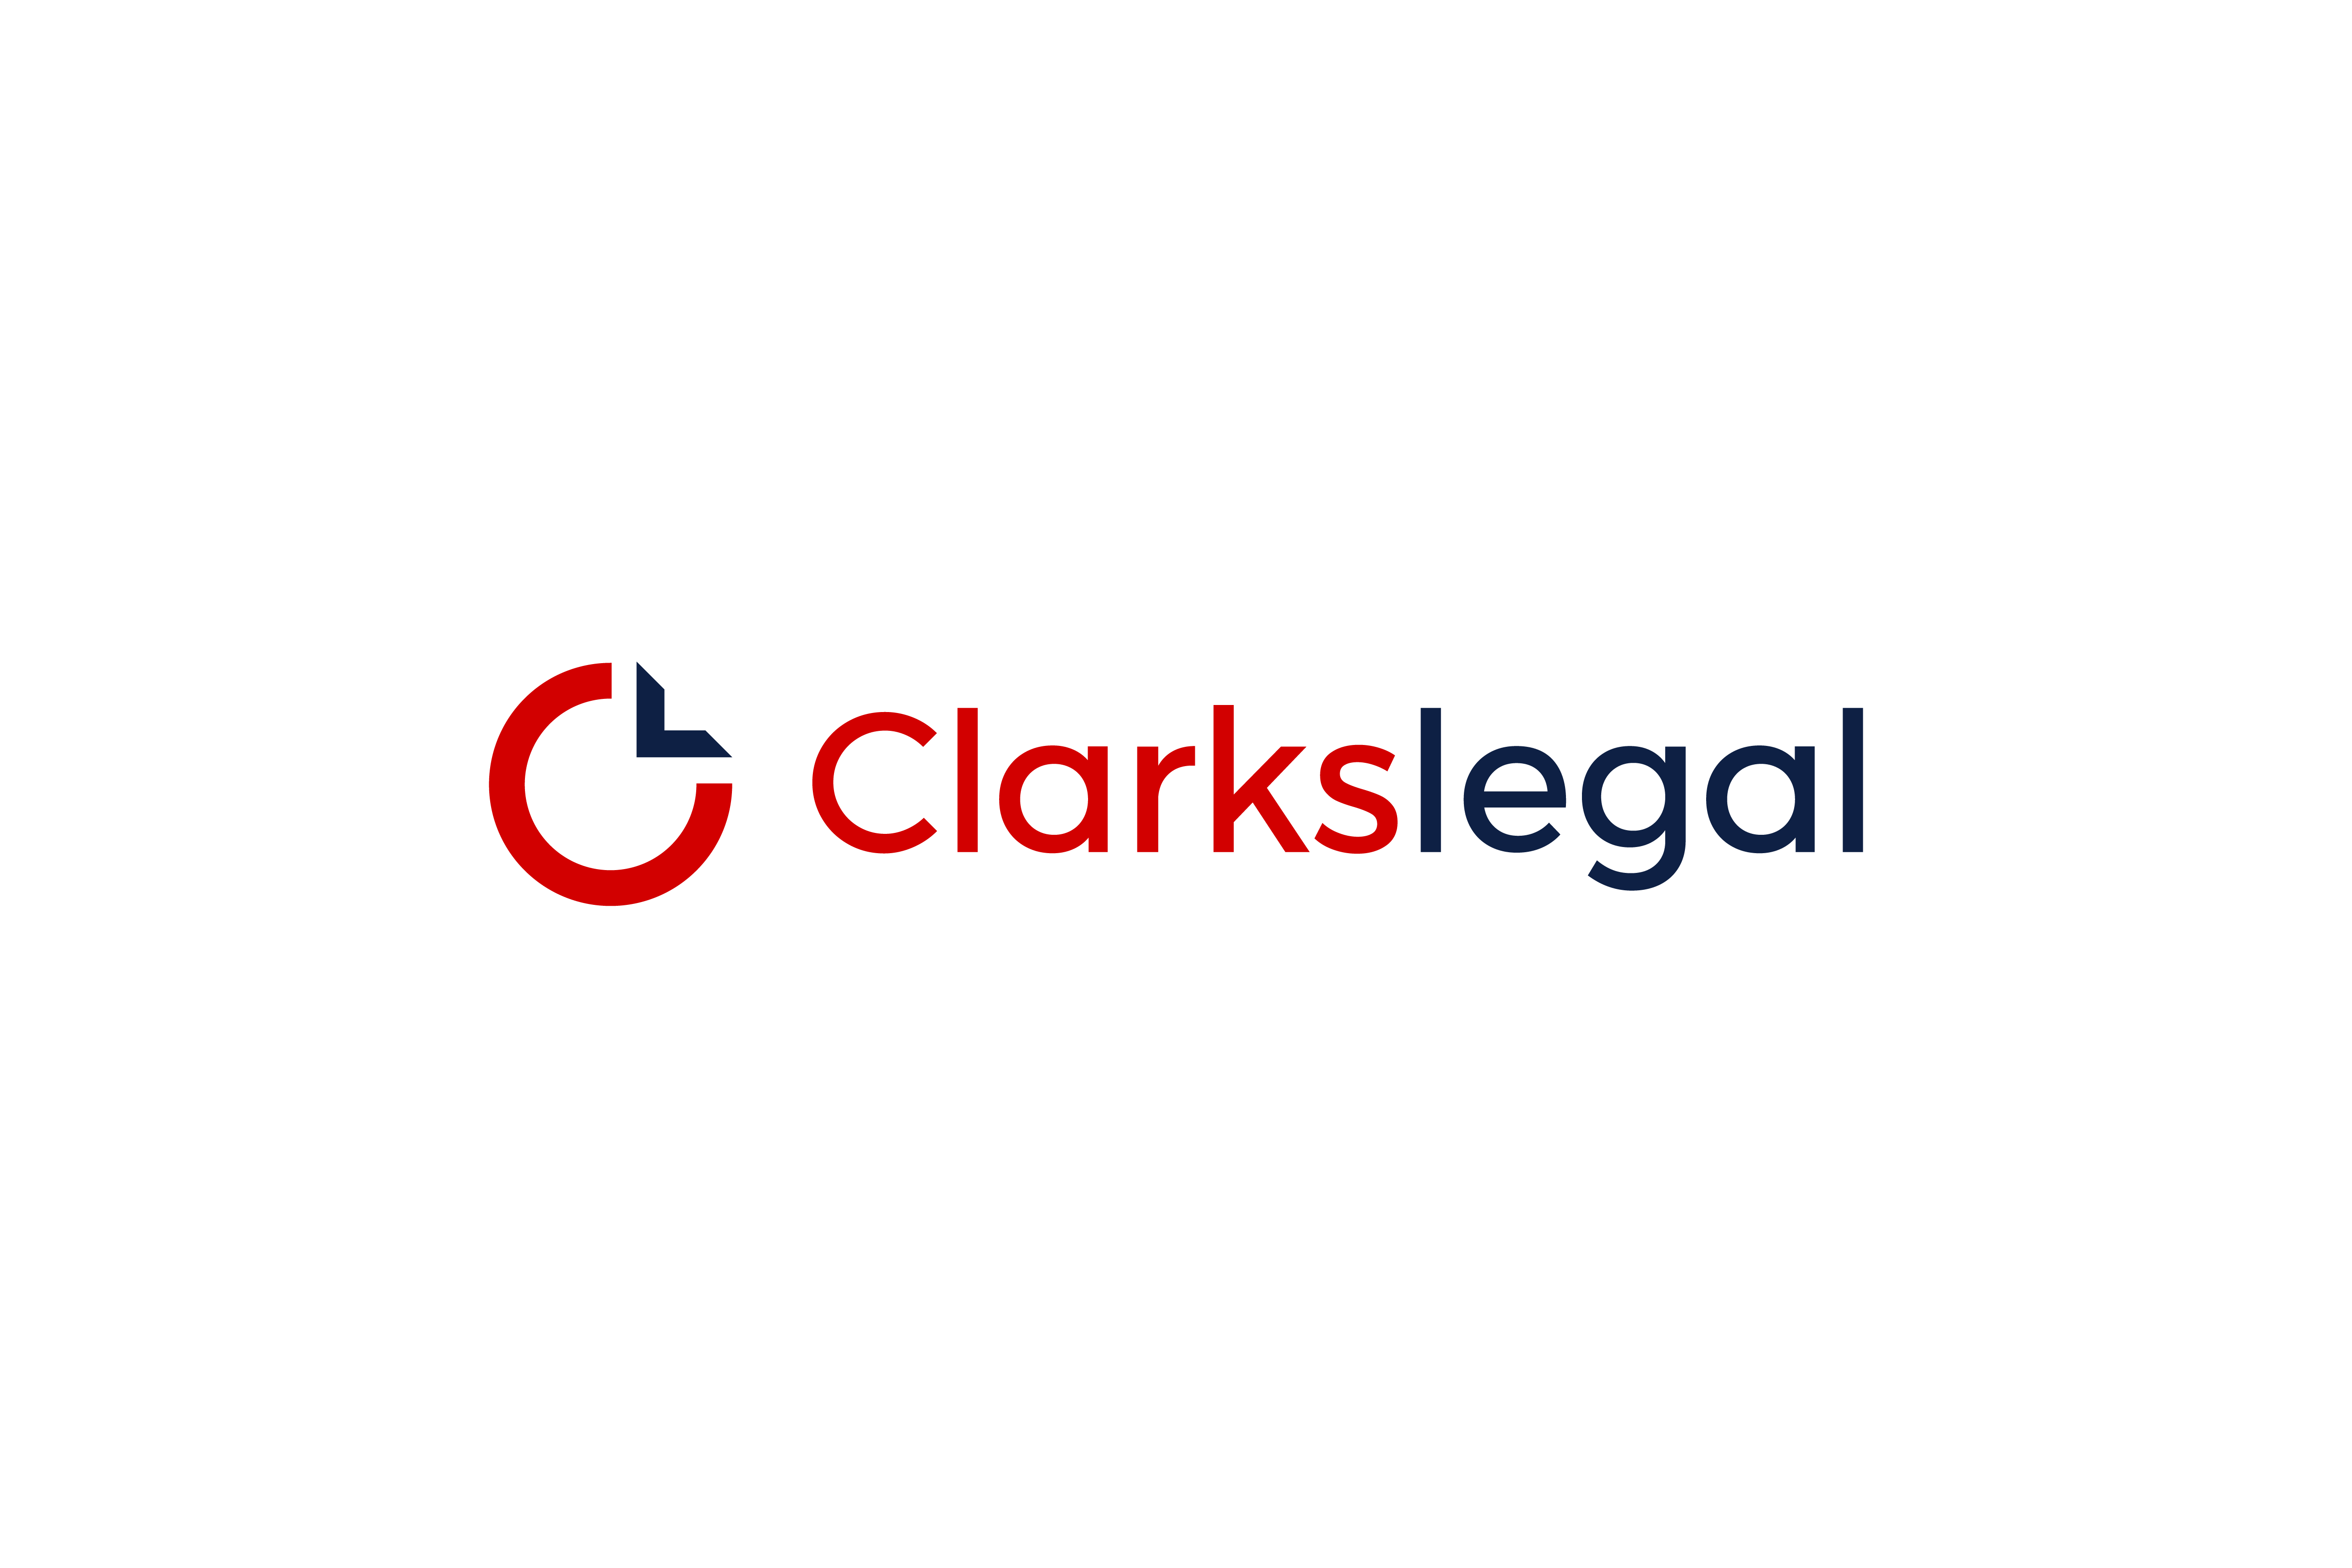 Clarkslegal - Branding - Case Study by Peek Creative Limited